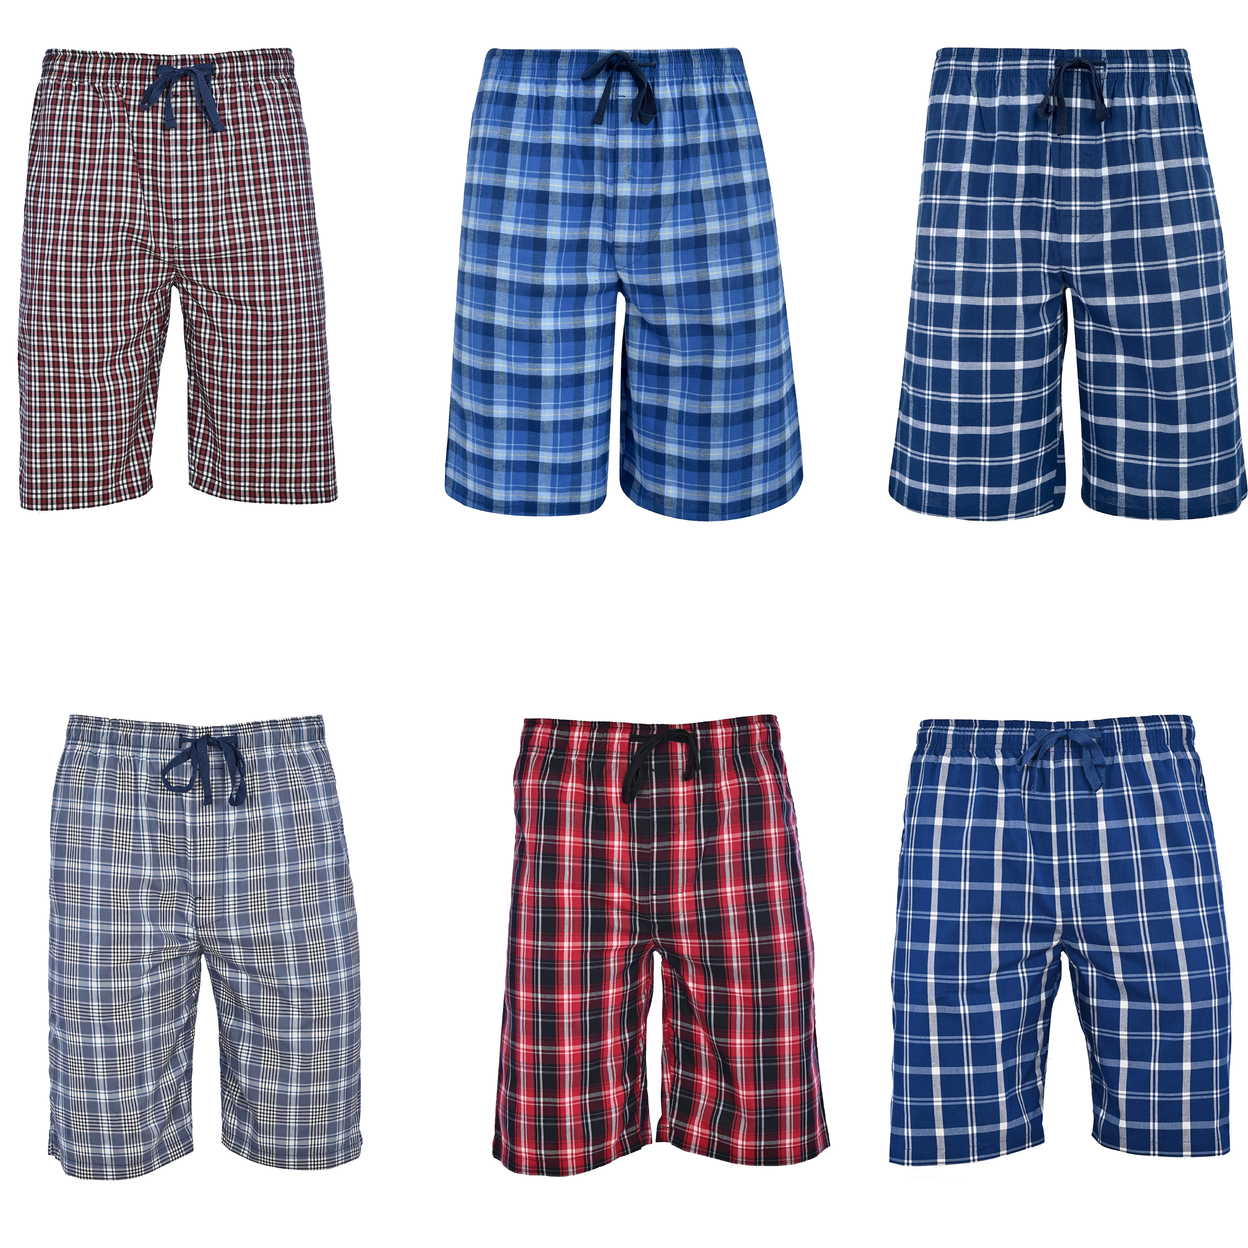 2-Pack: Men's Ultra Soft Plaid Lounge Pajama Sleep Wear Shorts - Grey & Grey, Large